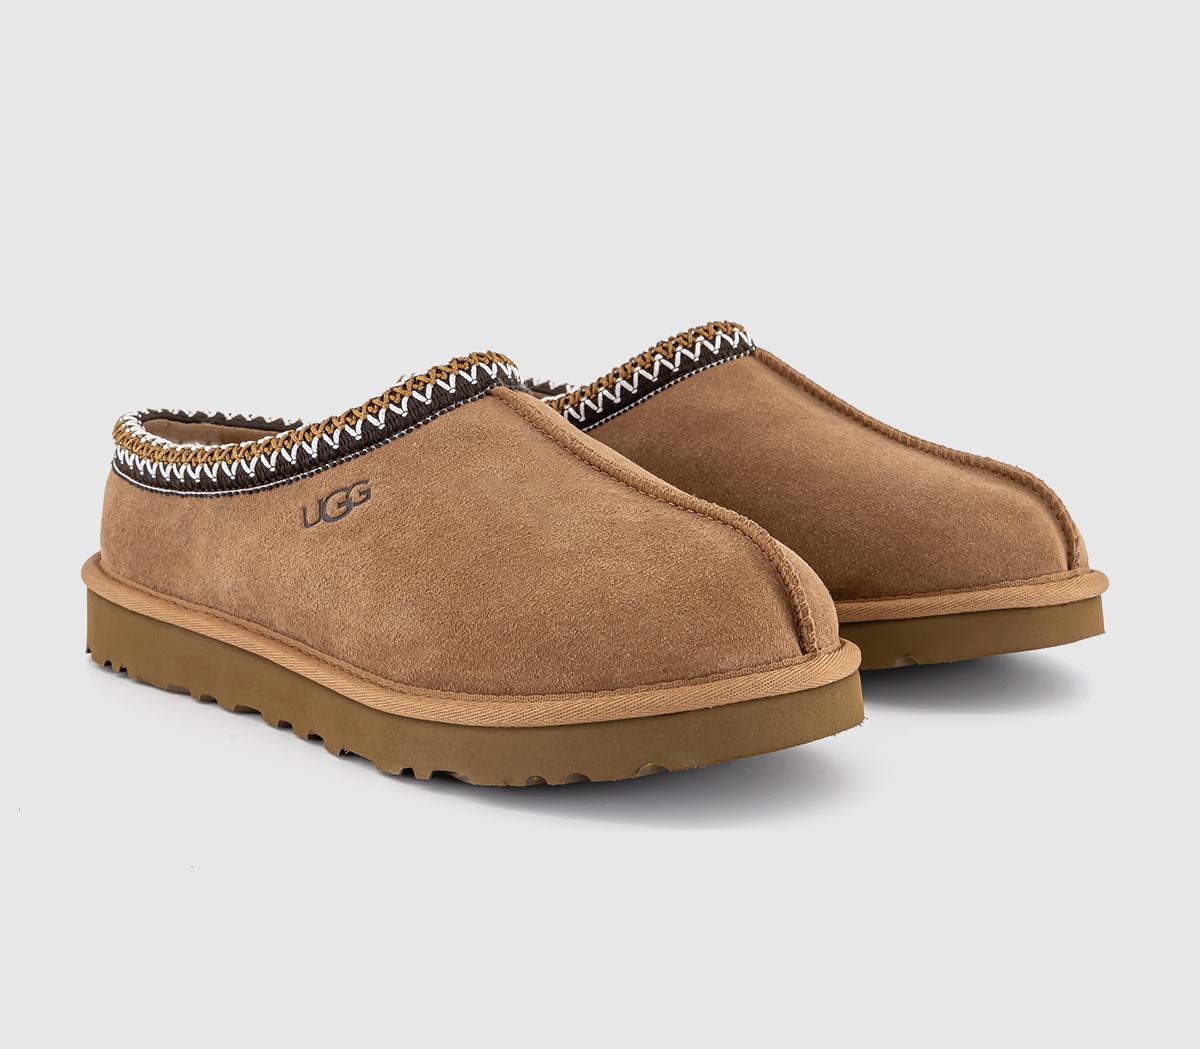 UGG Tasman Slippers M Chestnut - Men's Casual Shoes